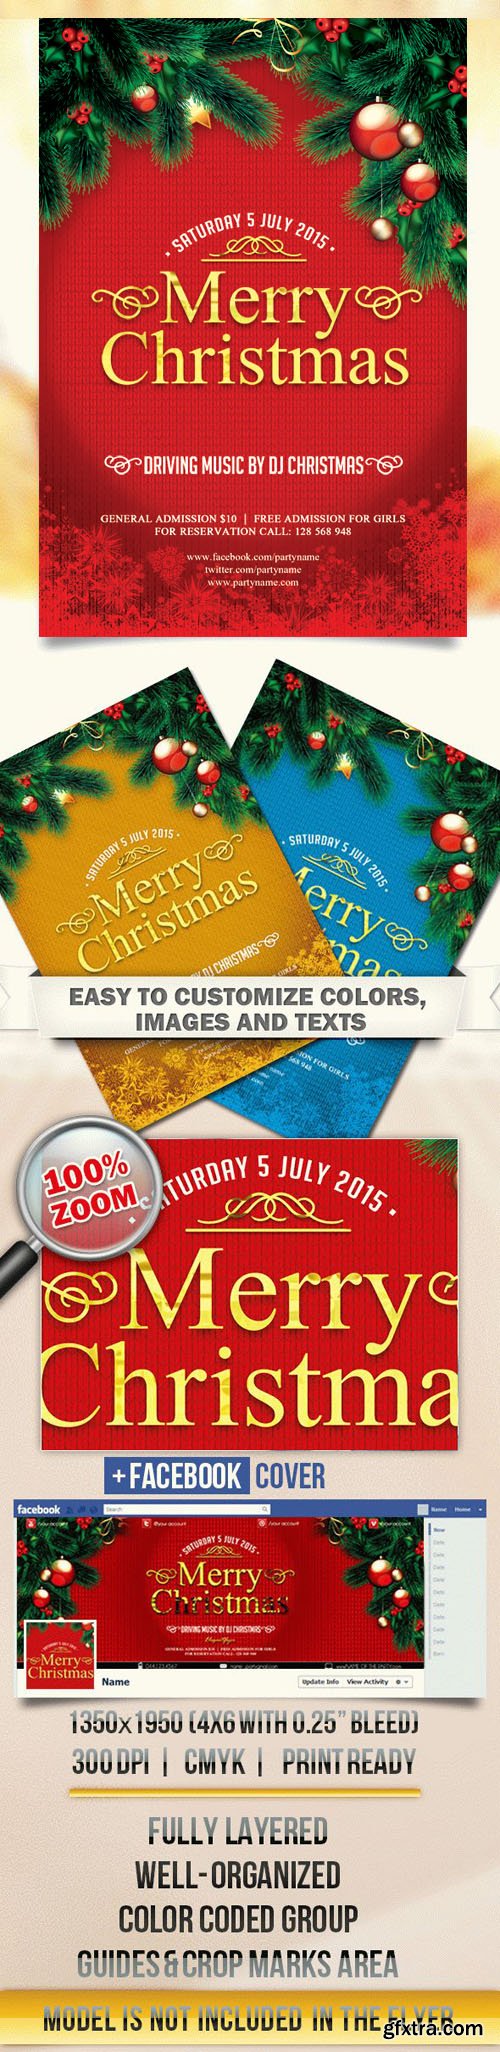 Merry Christmas - Flyer PSD Templates + Facebook Cover